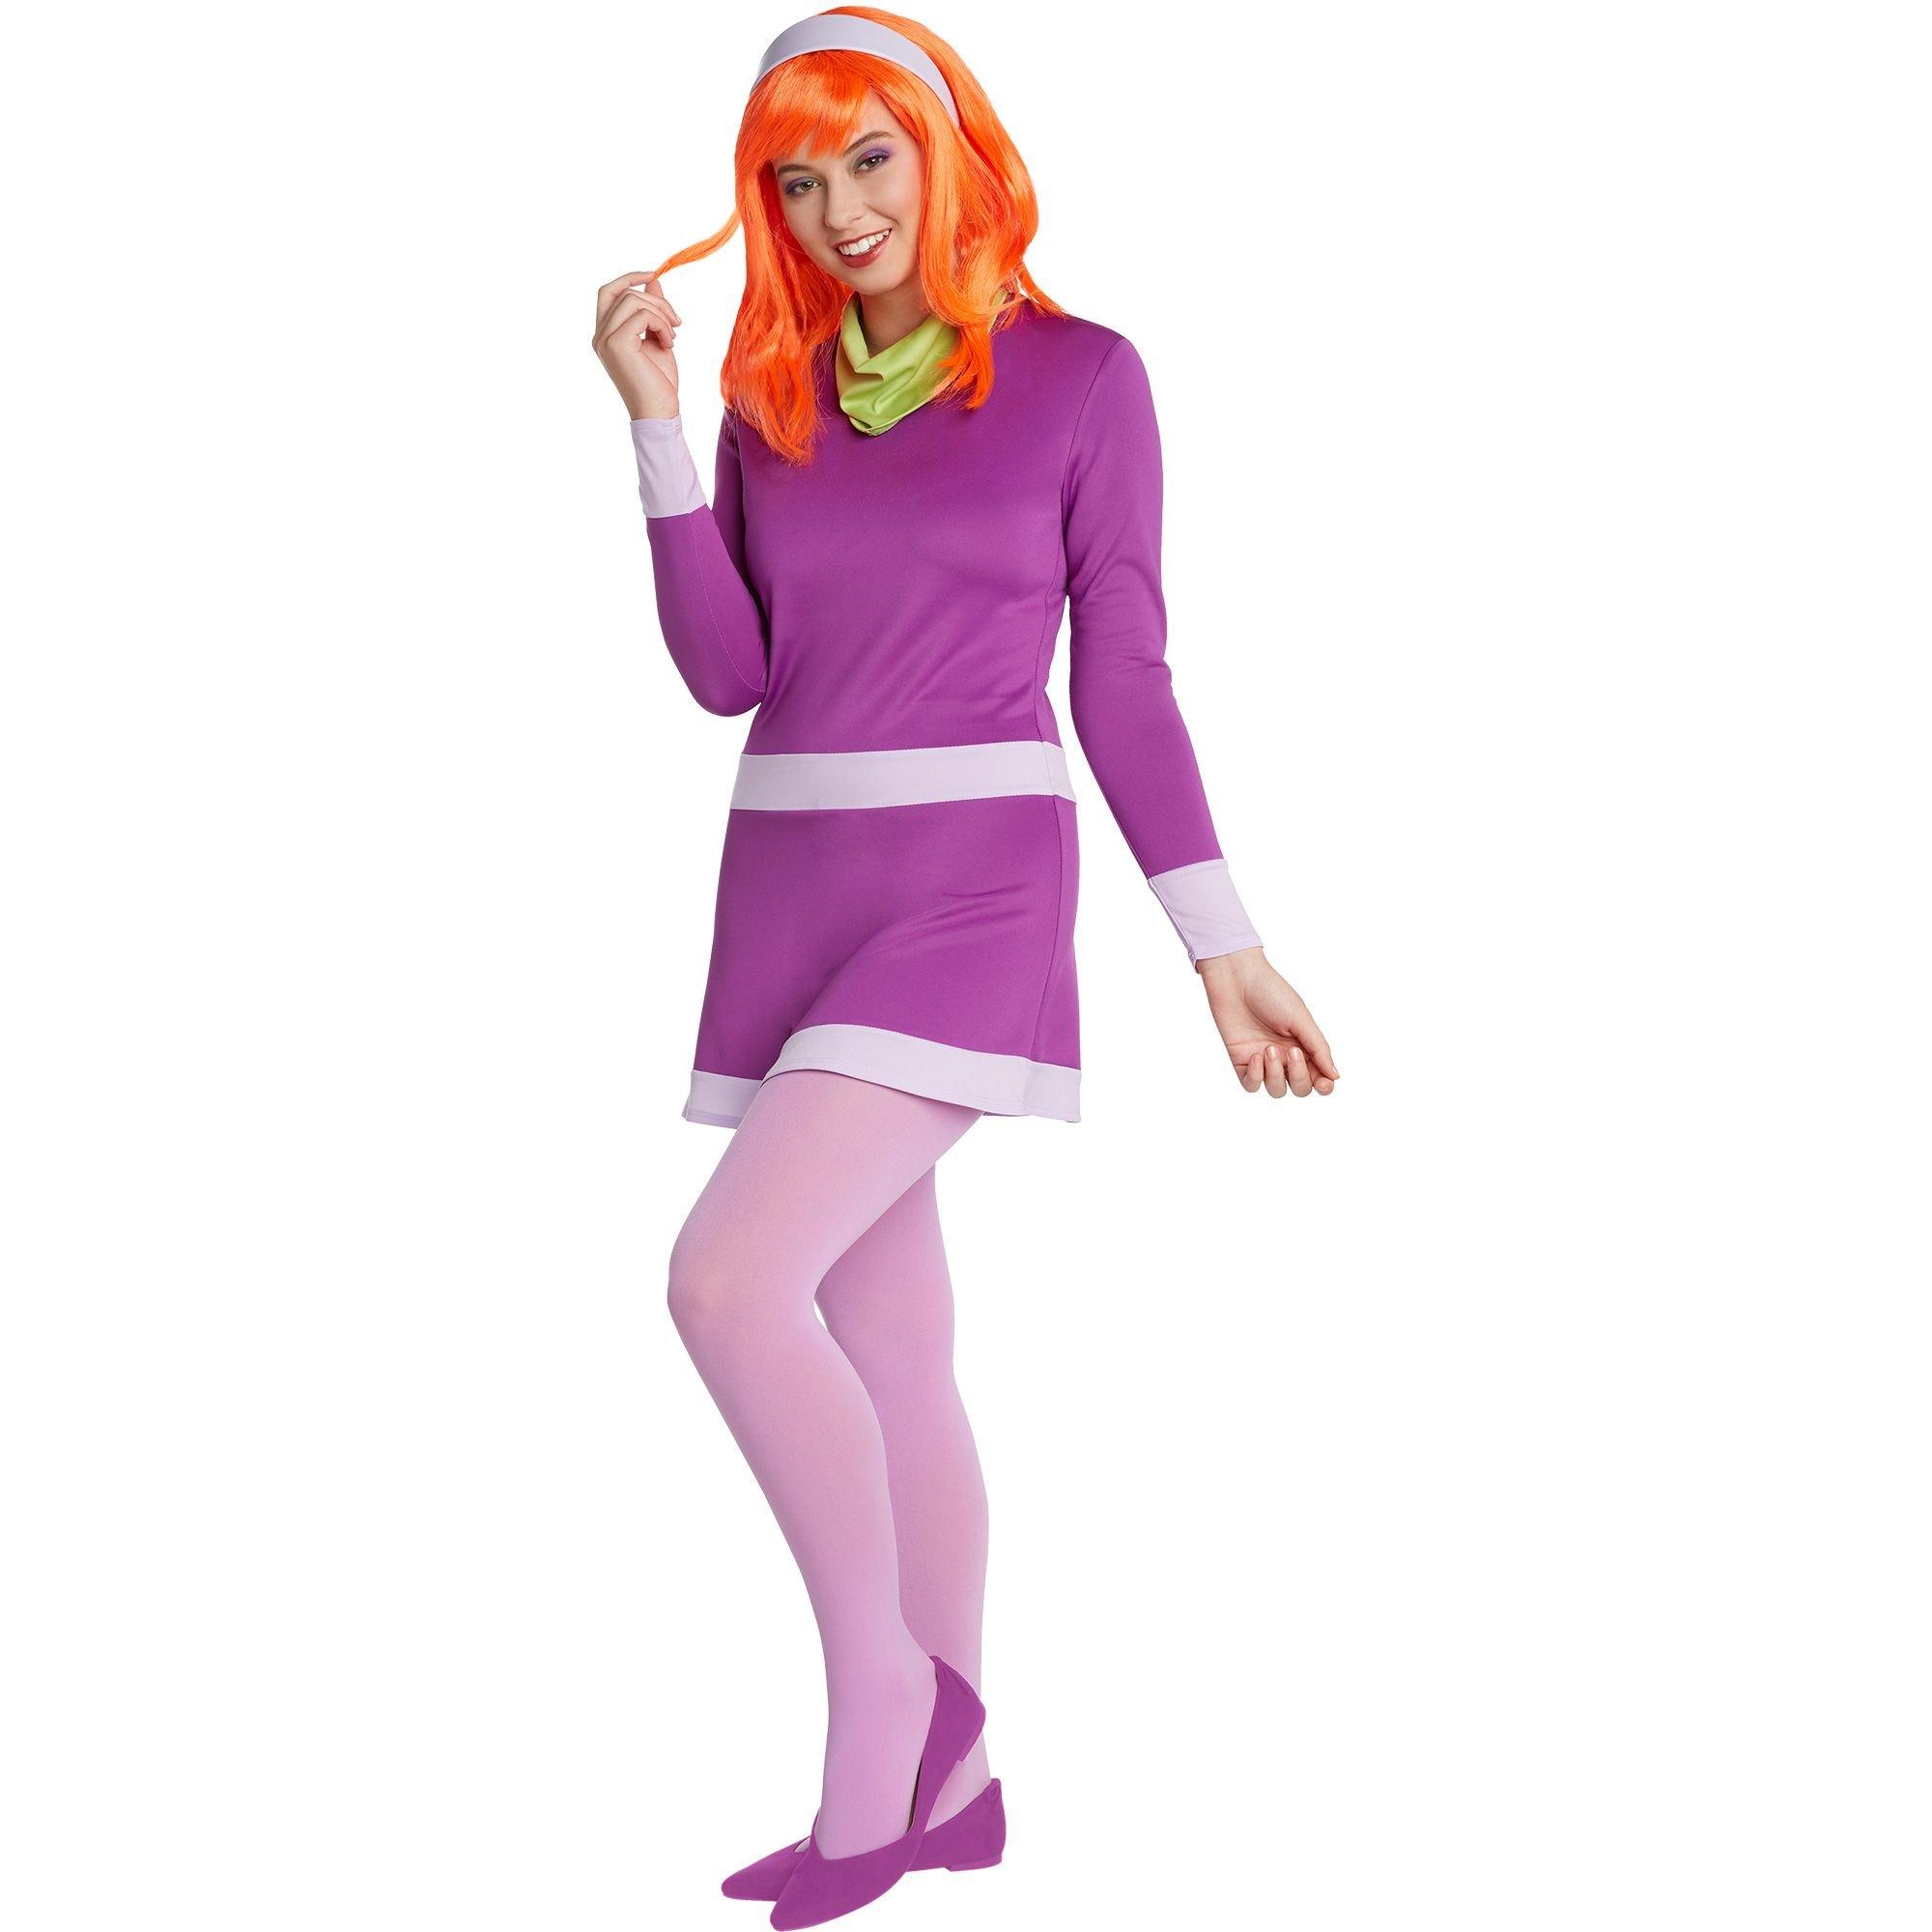 Image of: Latex Velma and Daphne costumes